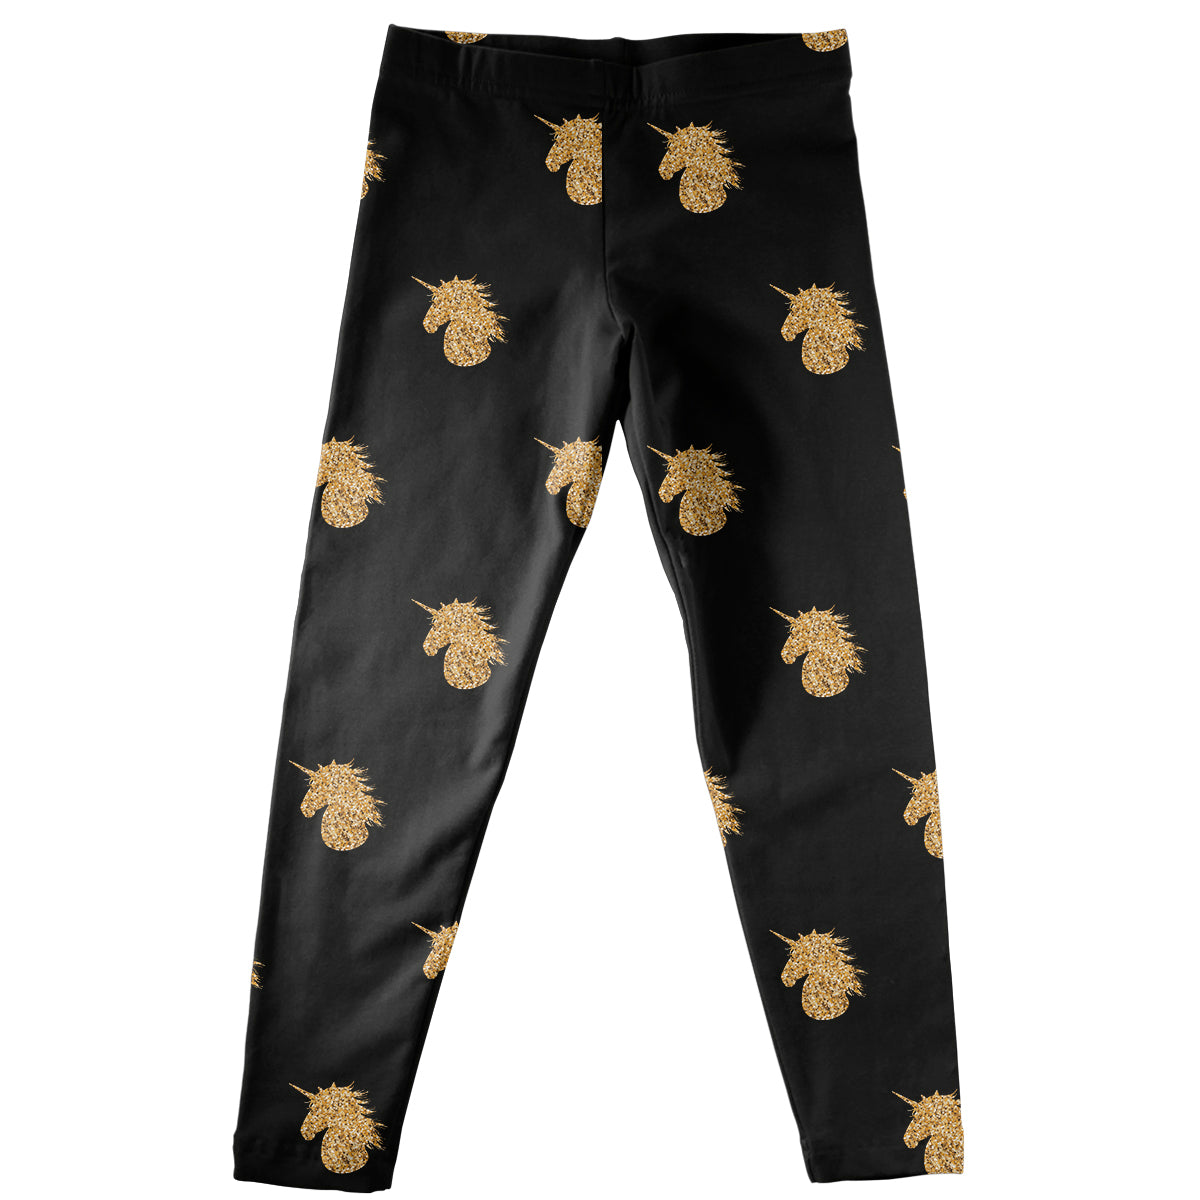 Black and gold unicorns girls leggings - Wimziy&Co.